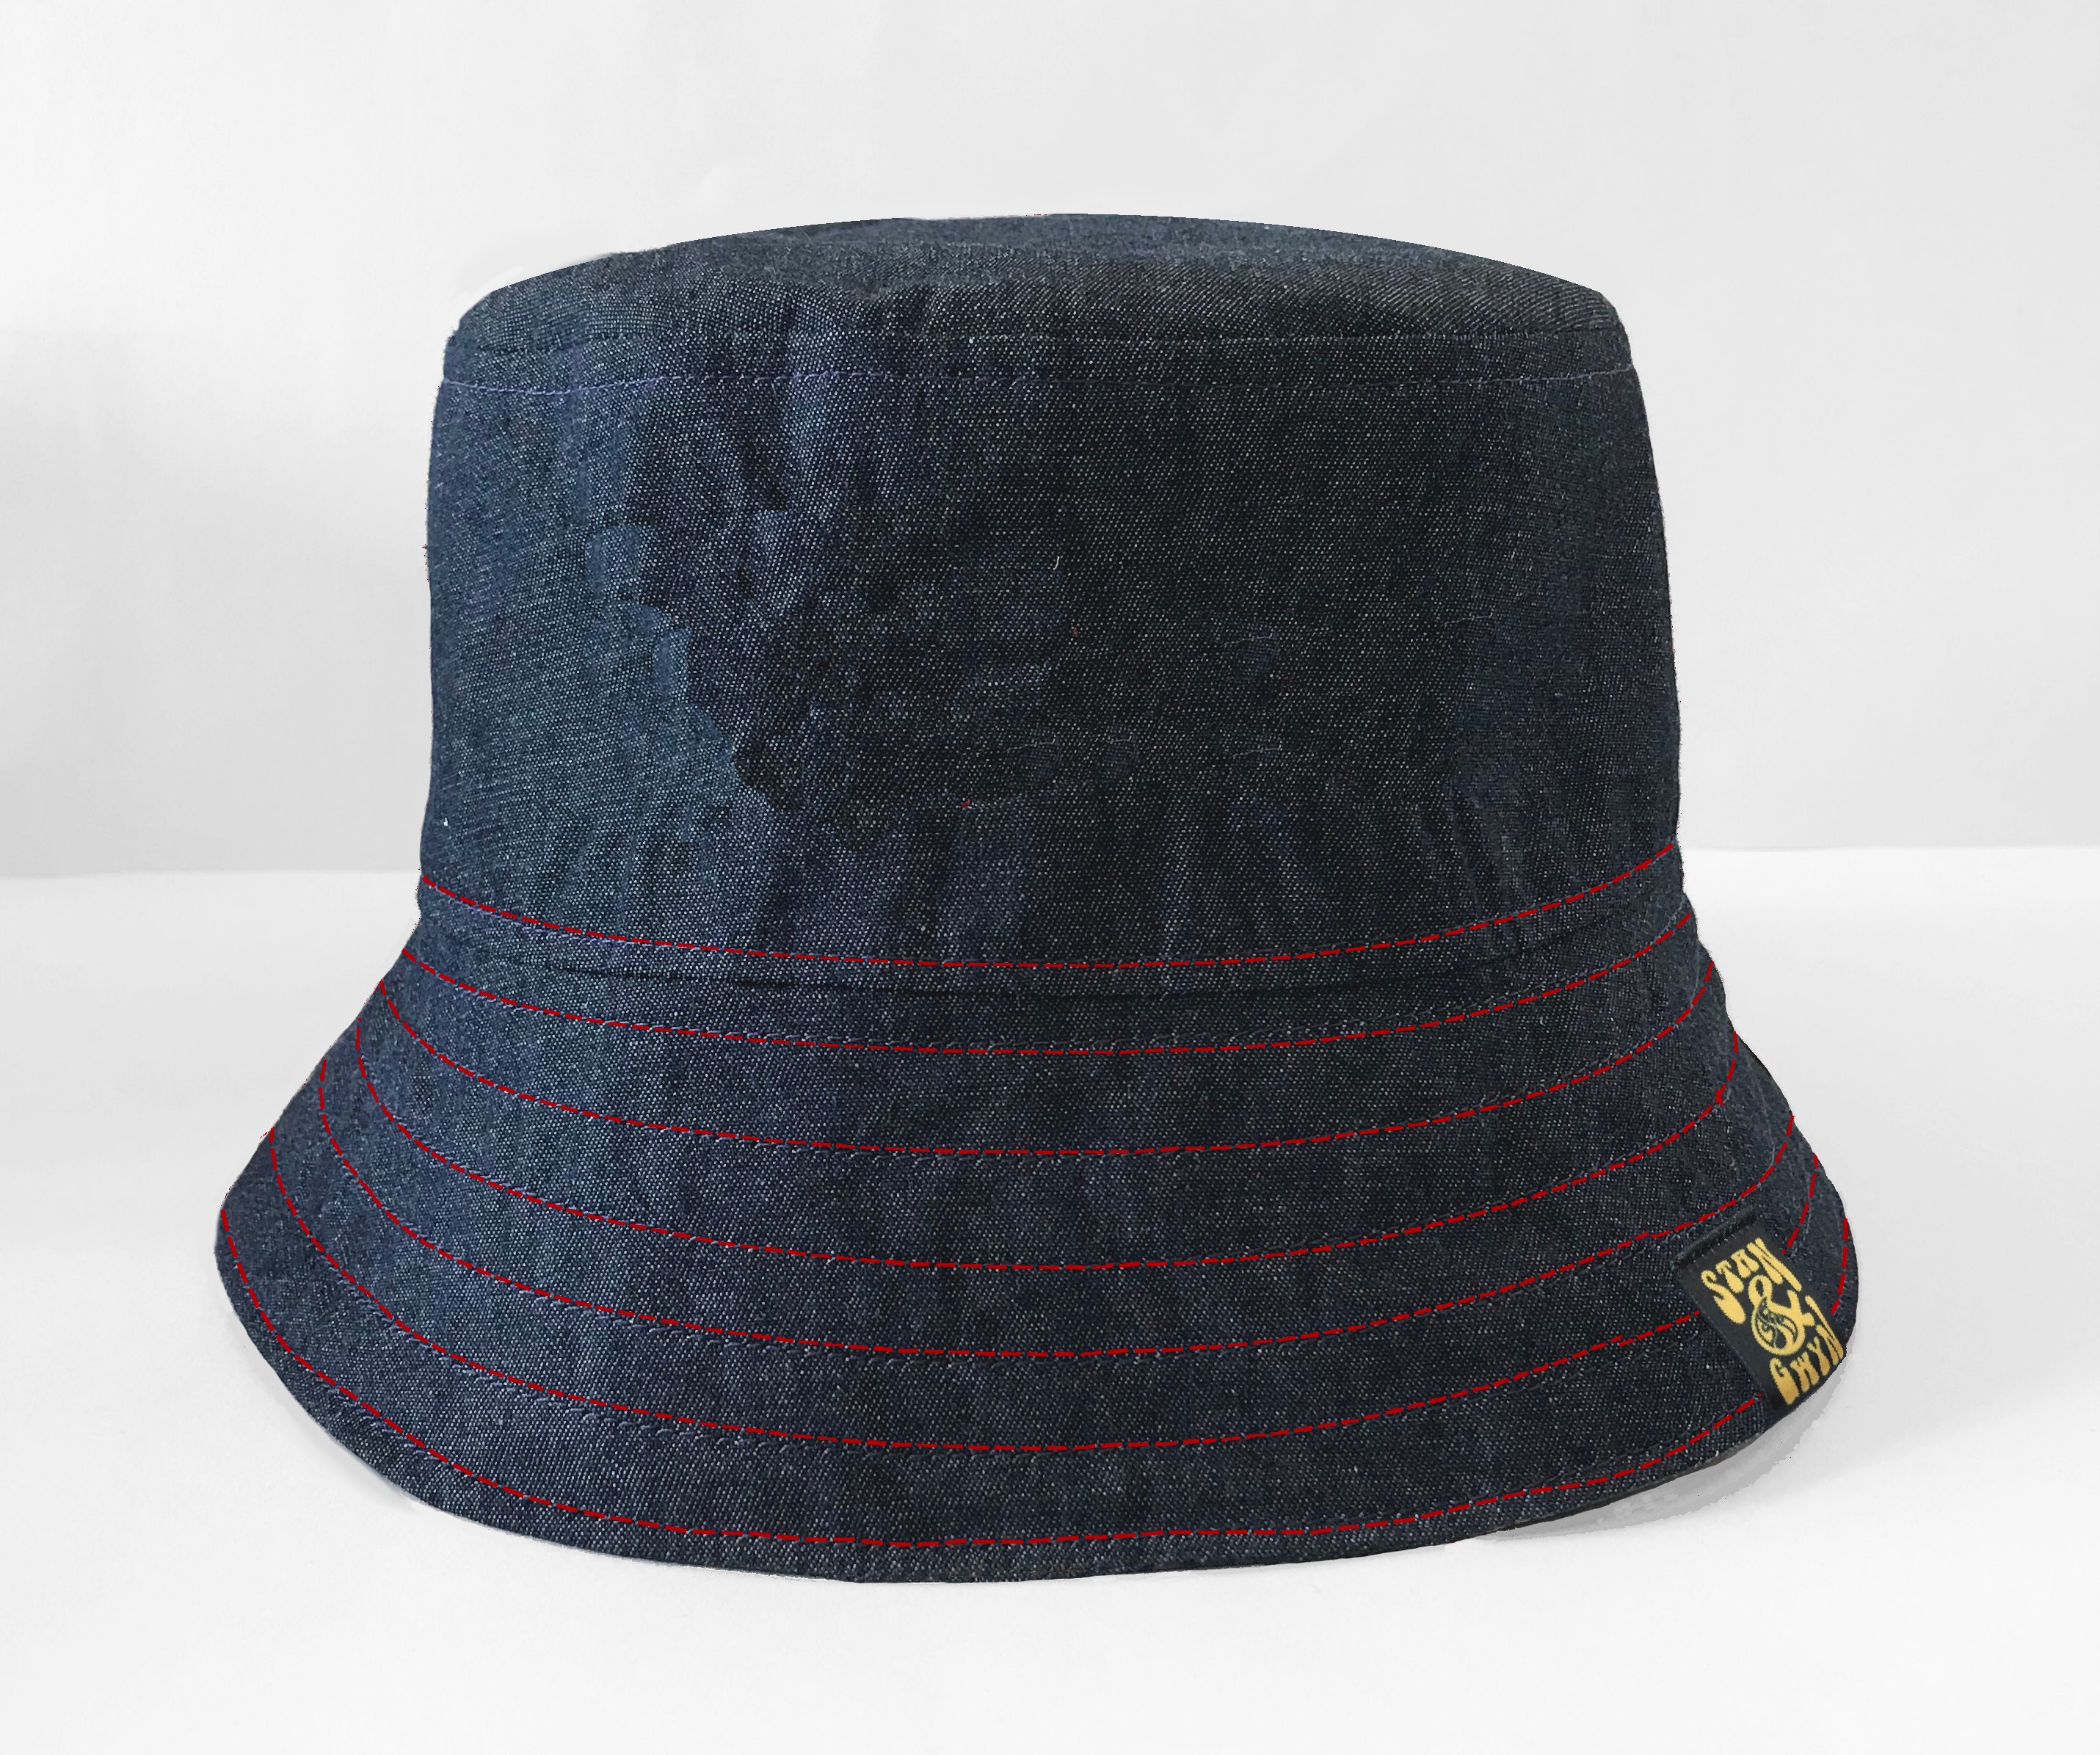 JTRVW Cowboy Hats Cymru Red Dragon Welsch Flag Plain Adjustable Cowboy Cap Denim Hat for Women and Men